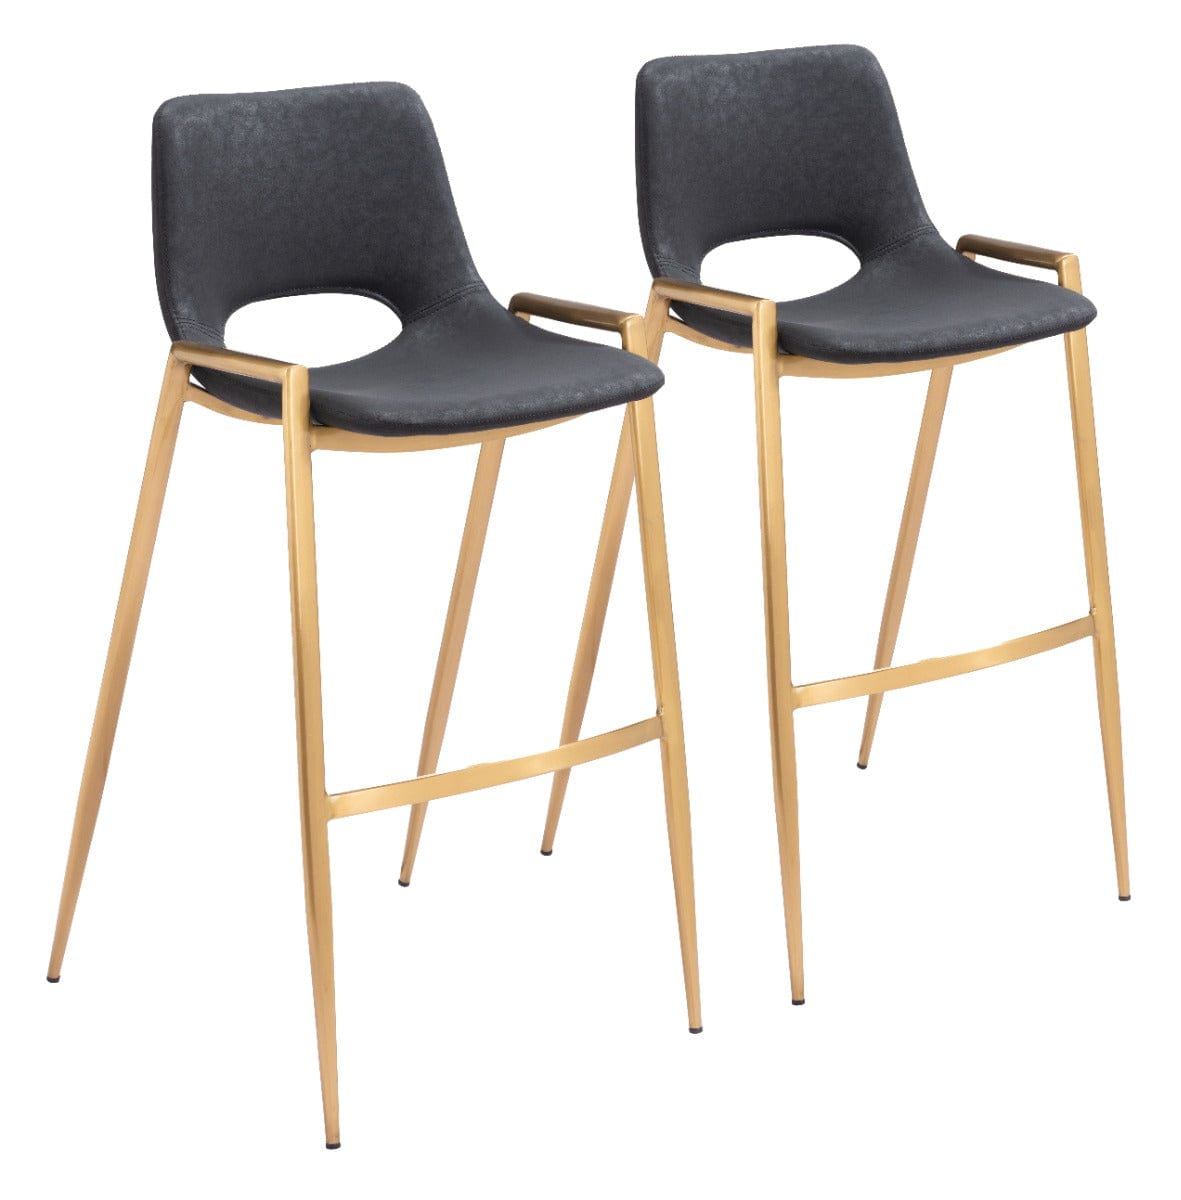 Set of 2 Desi stools